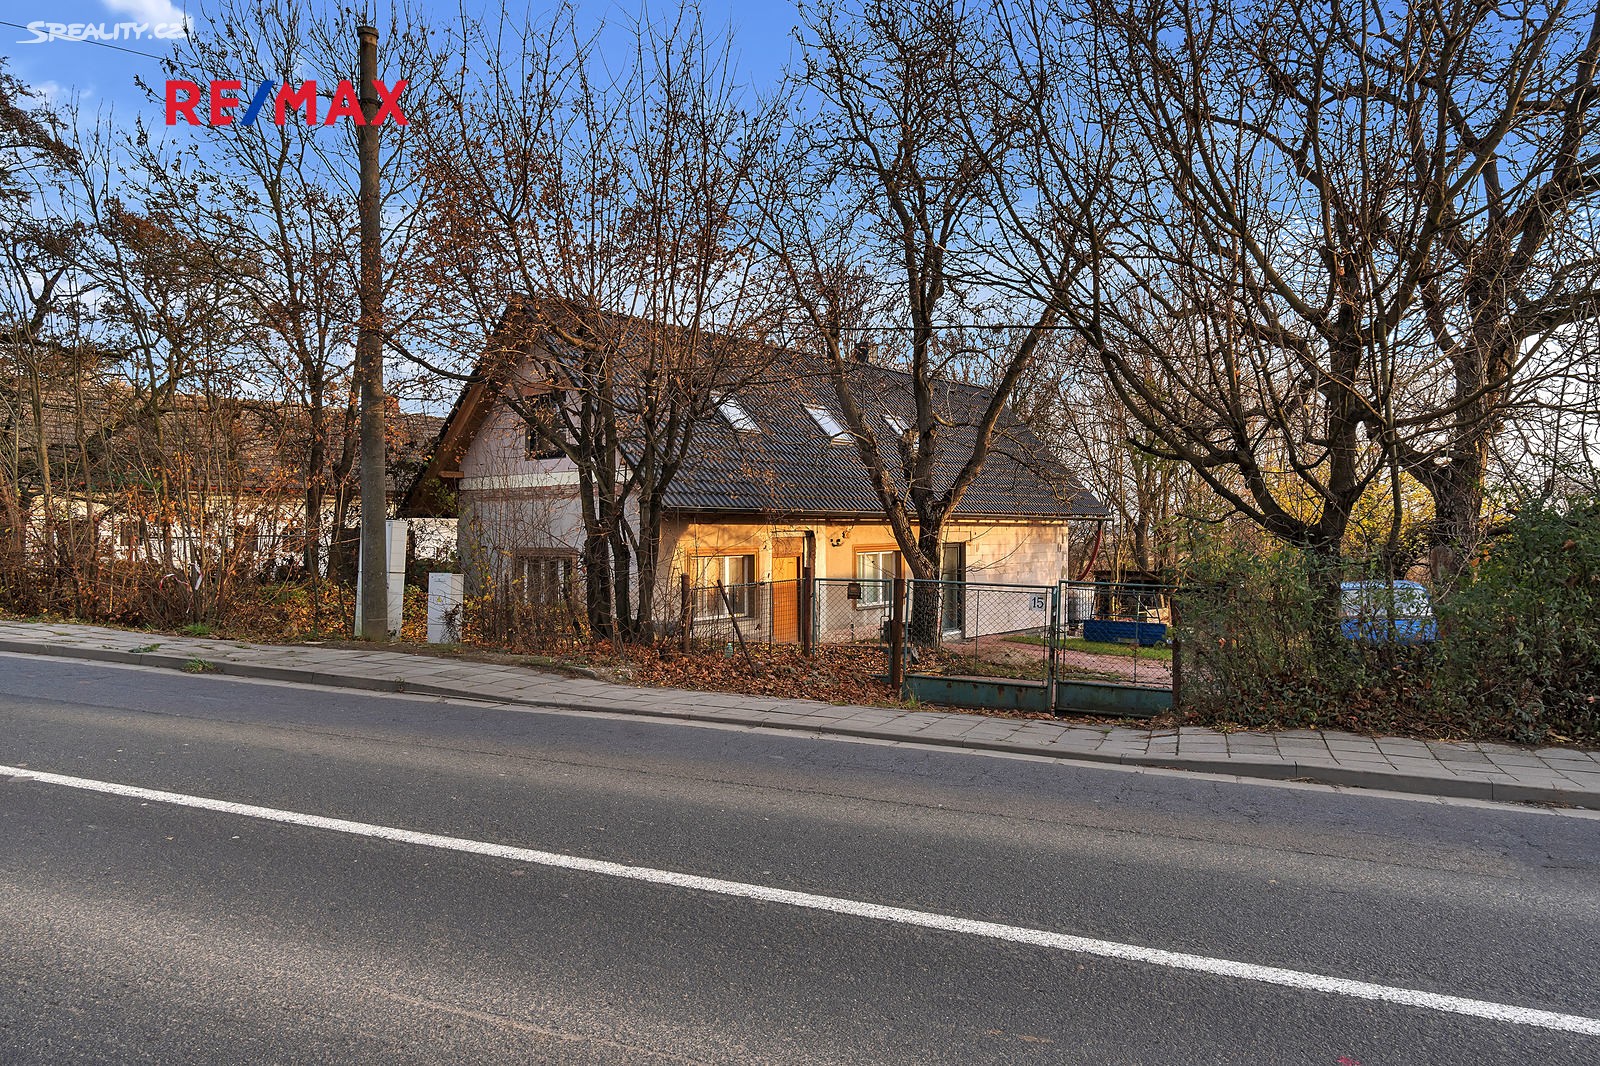 Prodej  rodinného domu 120 m², pozemek 153 m², Králova Lhota, okres Rychnov nad Kněžnou